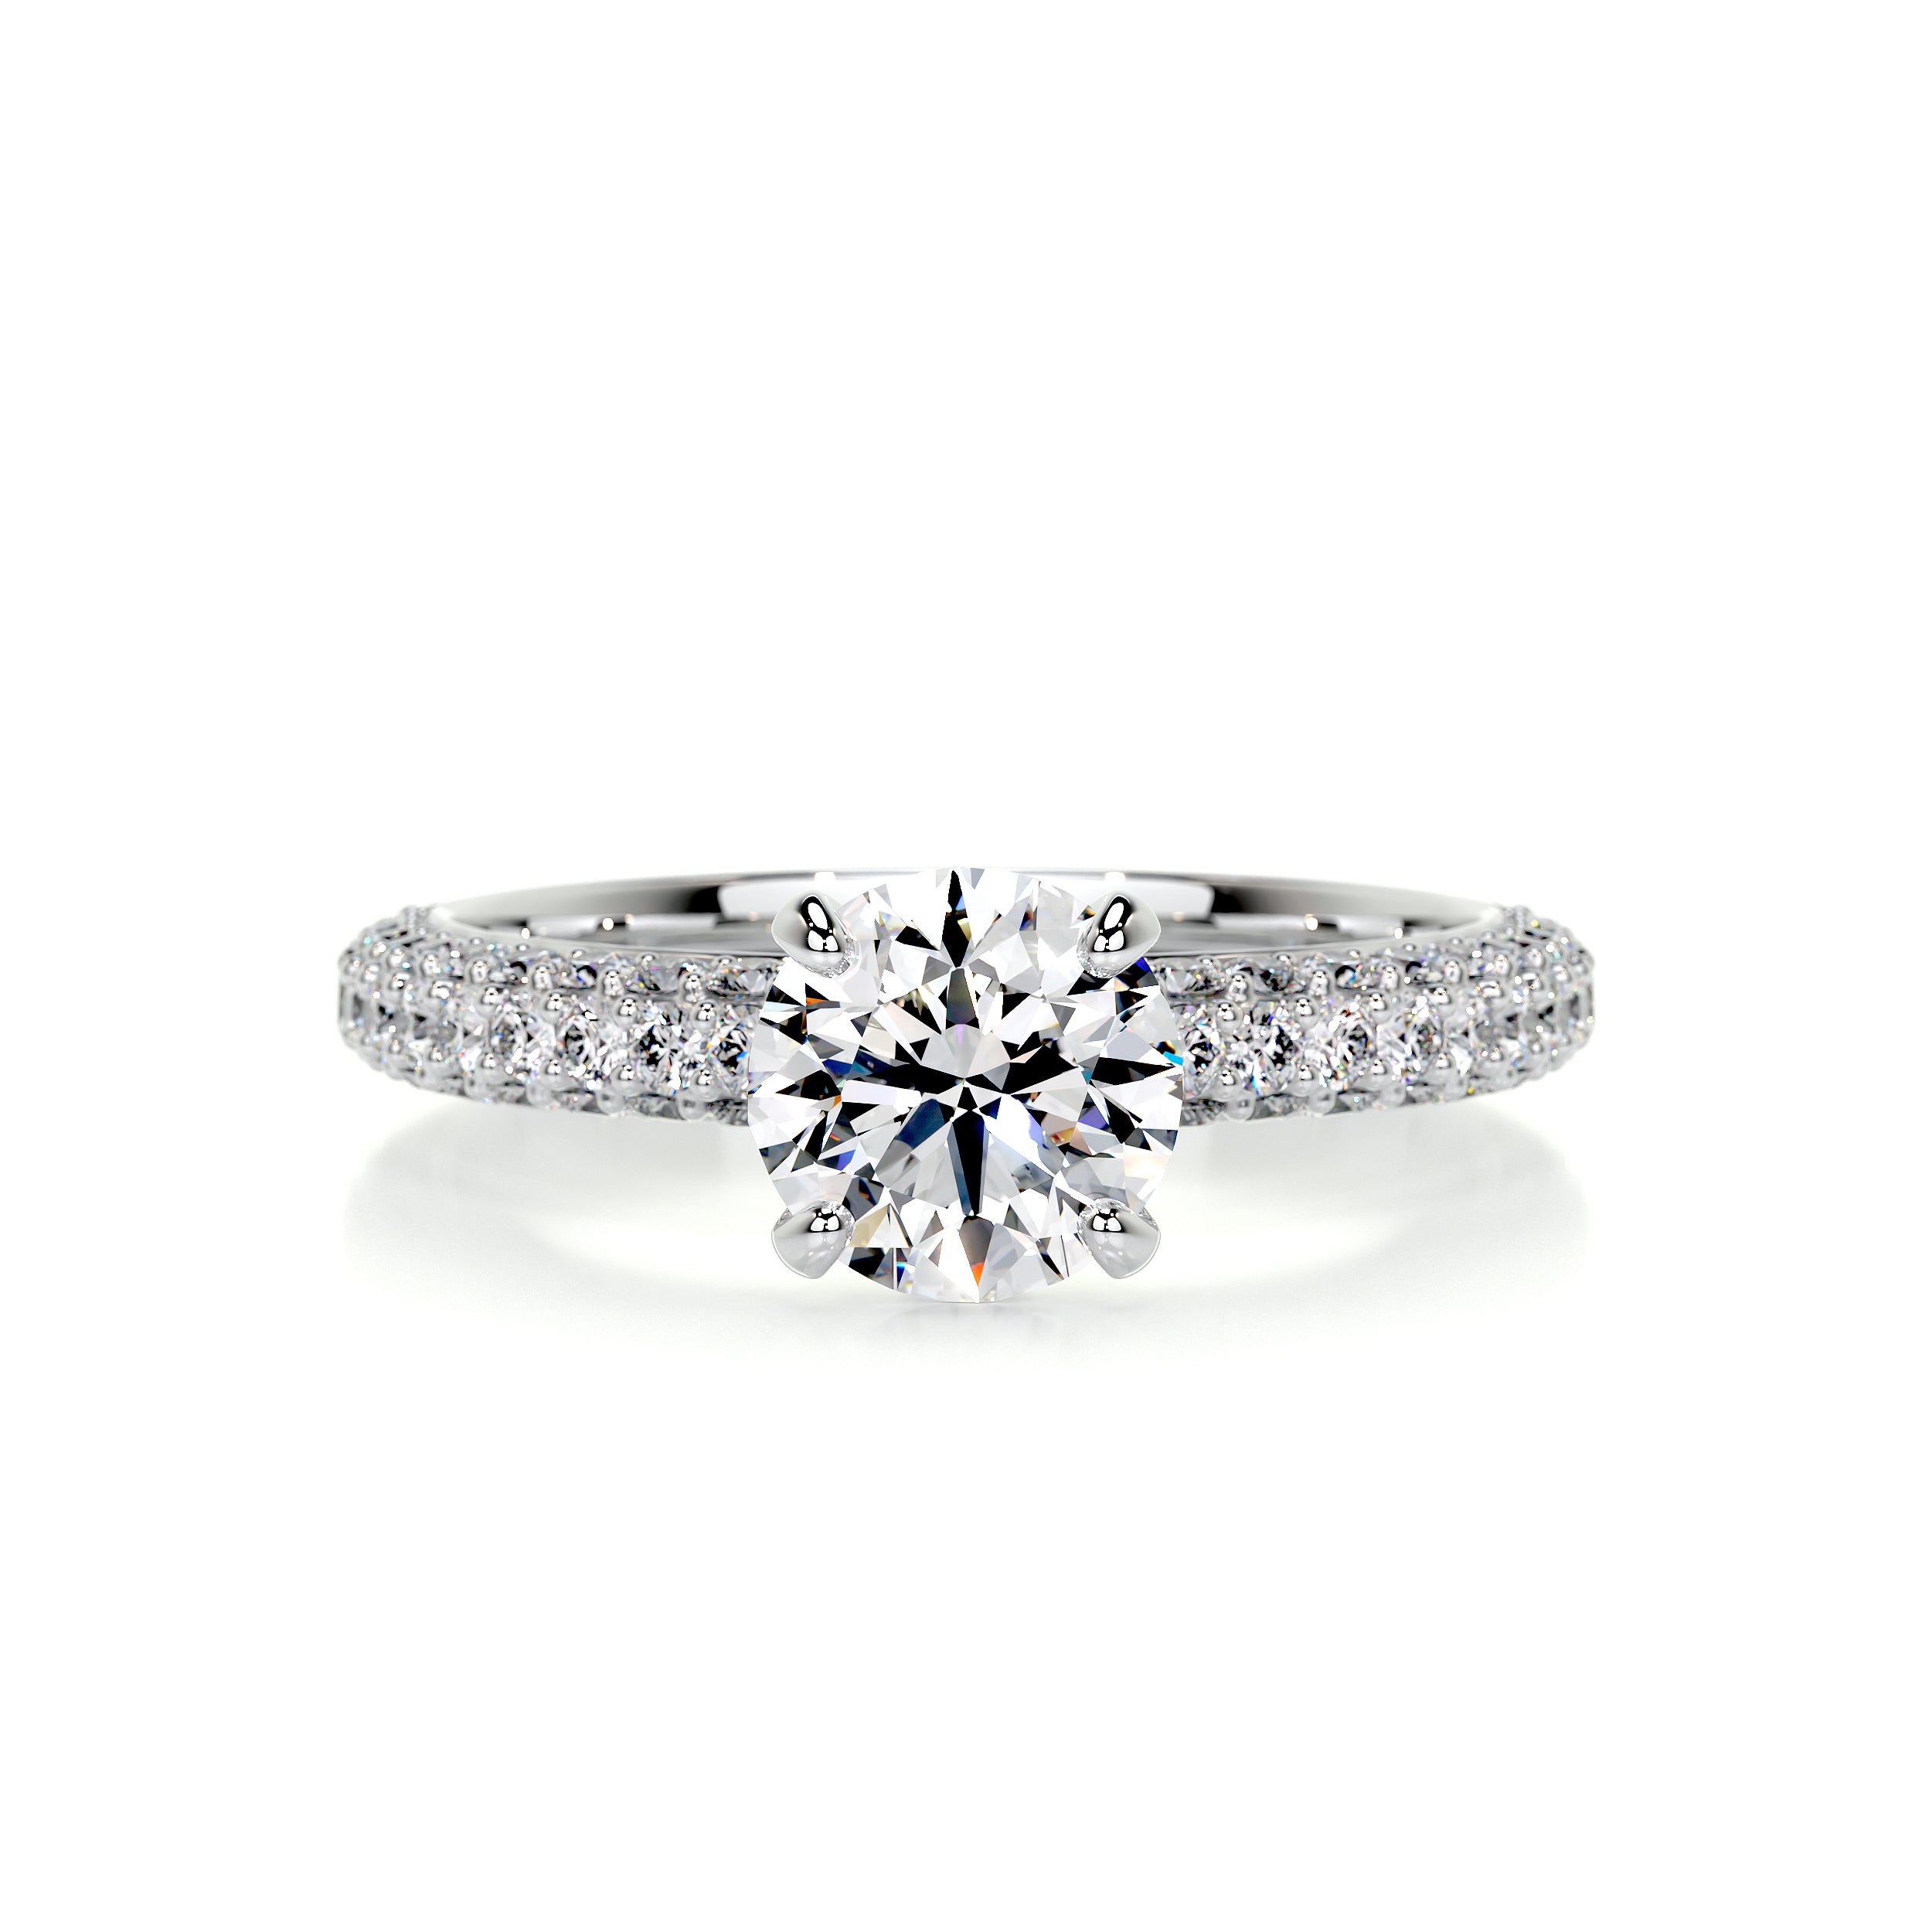 Lillian Diamond Engagement Ring   (1.5 Carat) -Platinum